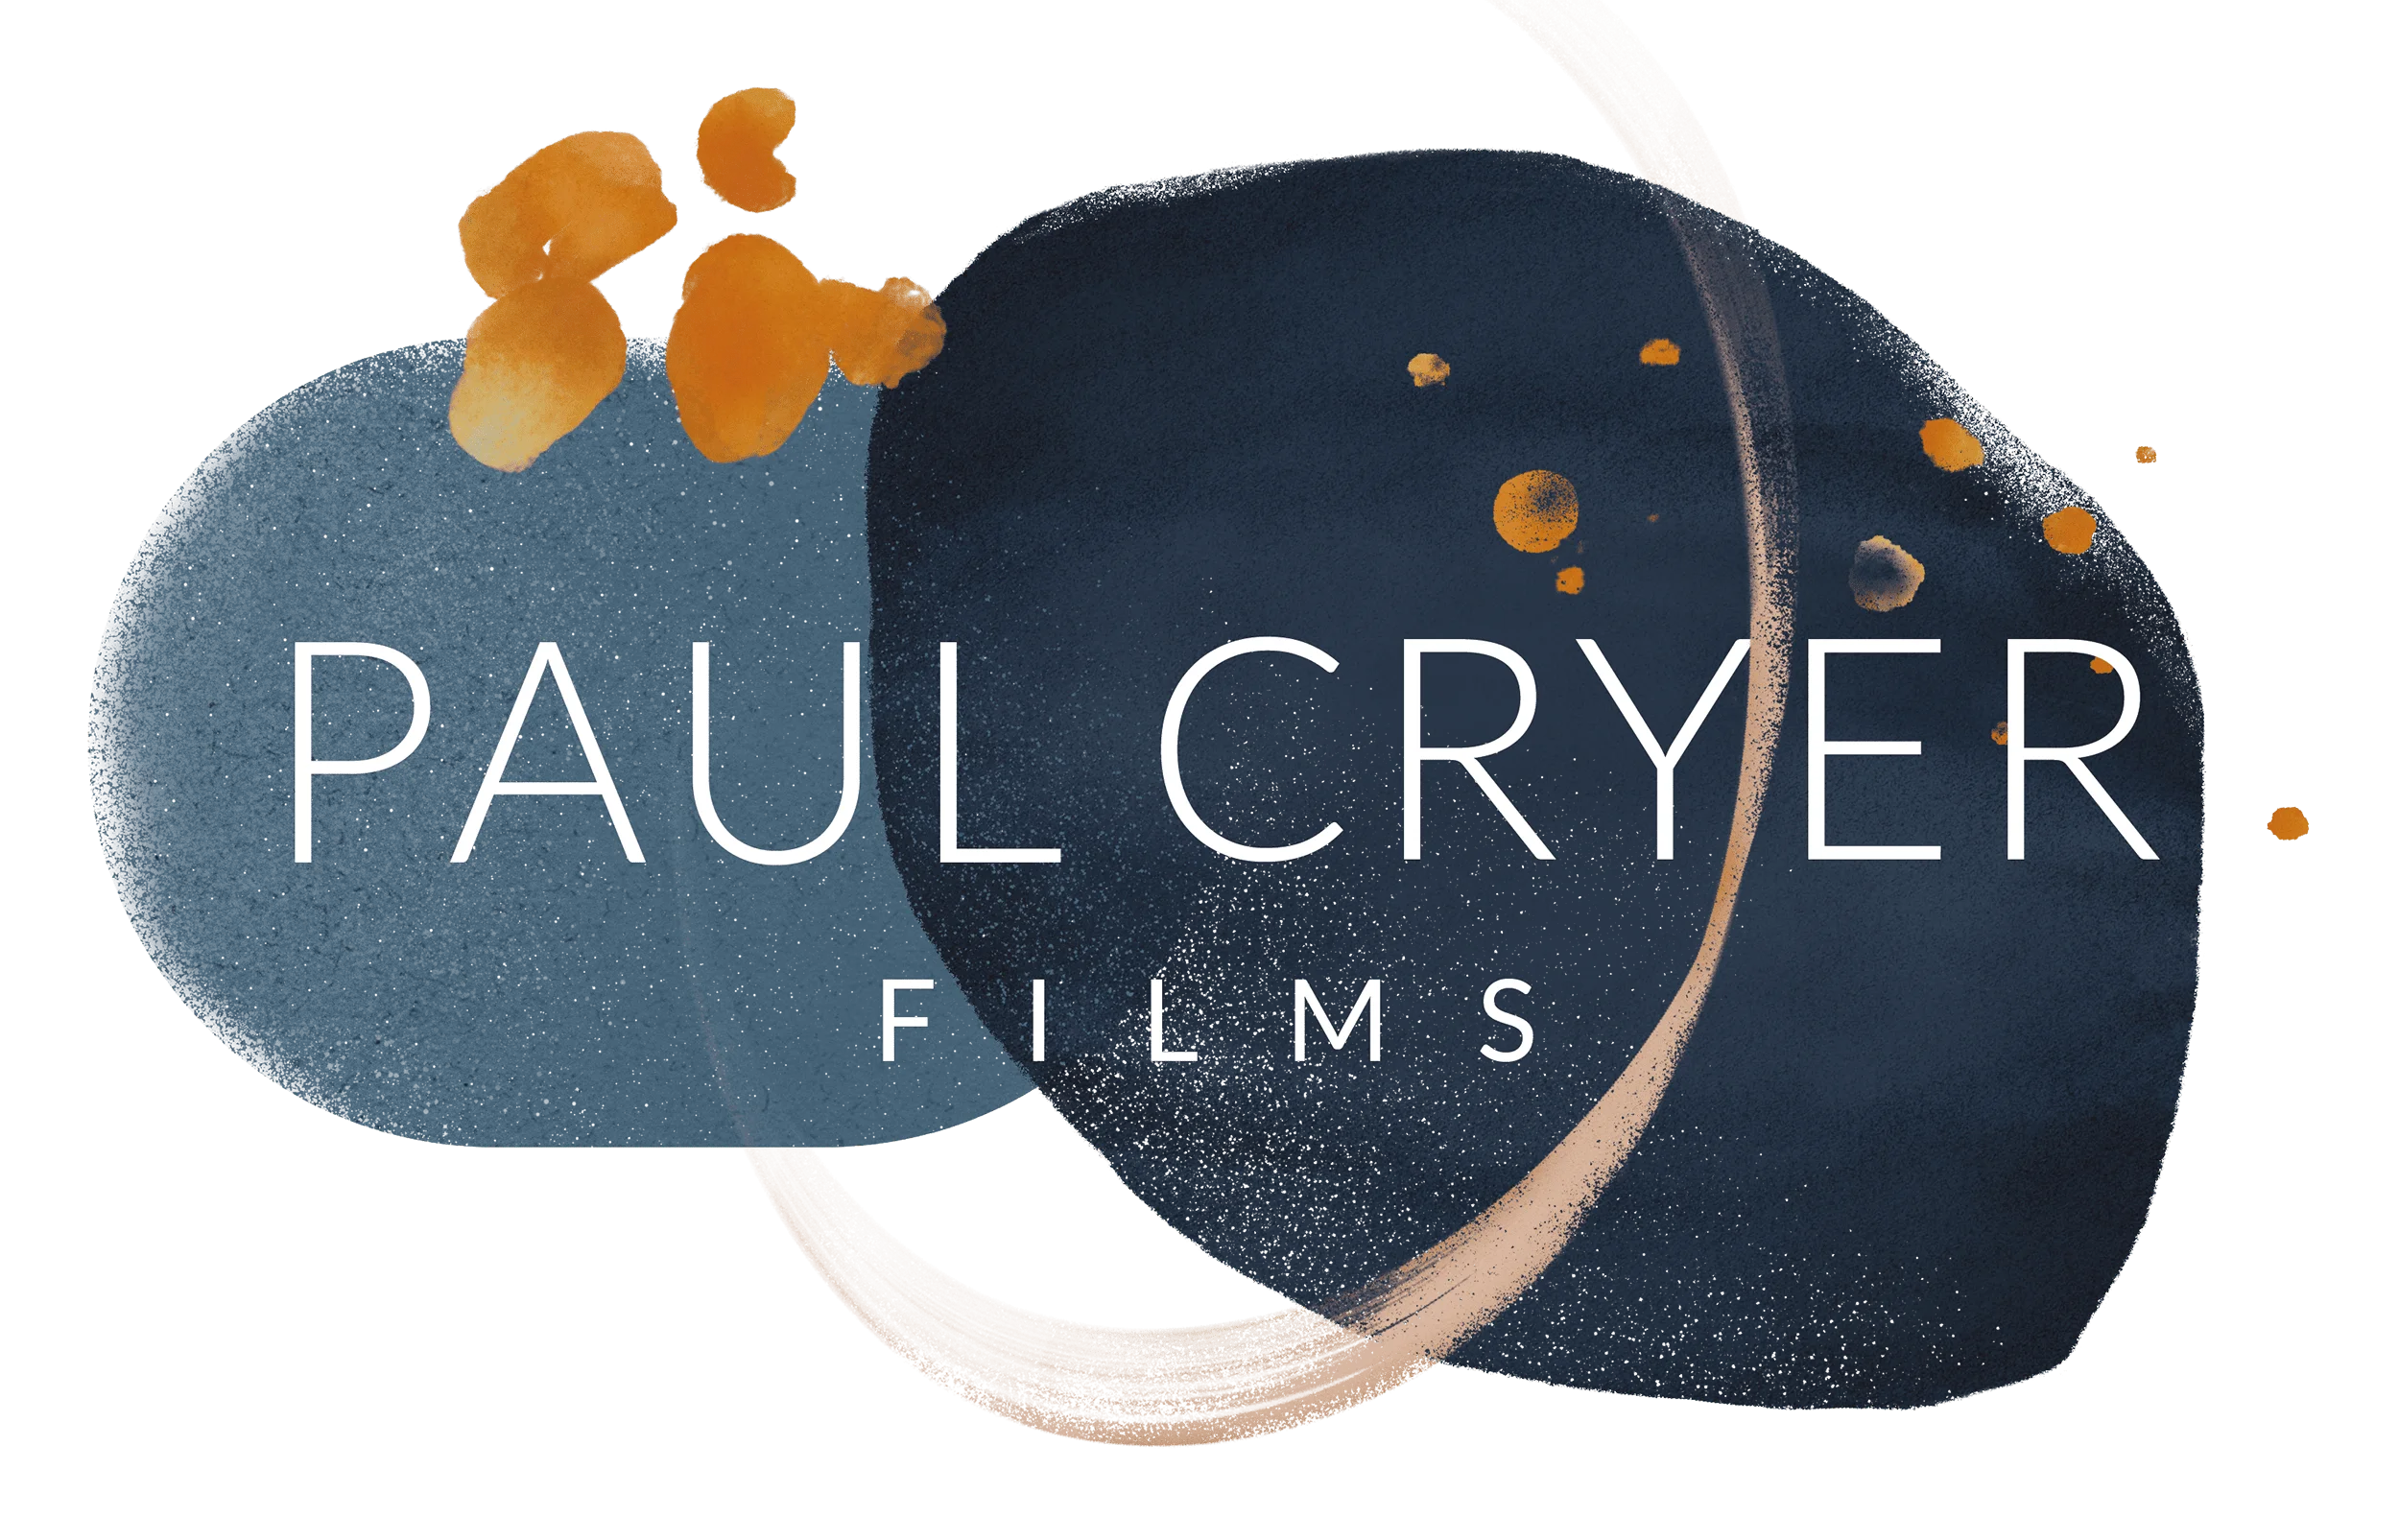 Paul Cryer Films - Artistic Modern Manchester UK Wedding Videographer - Main logo